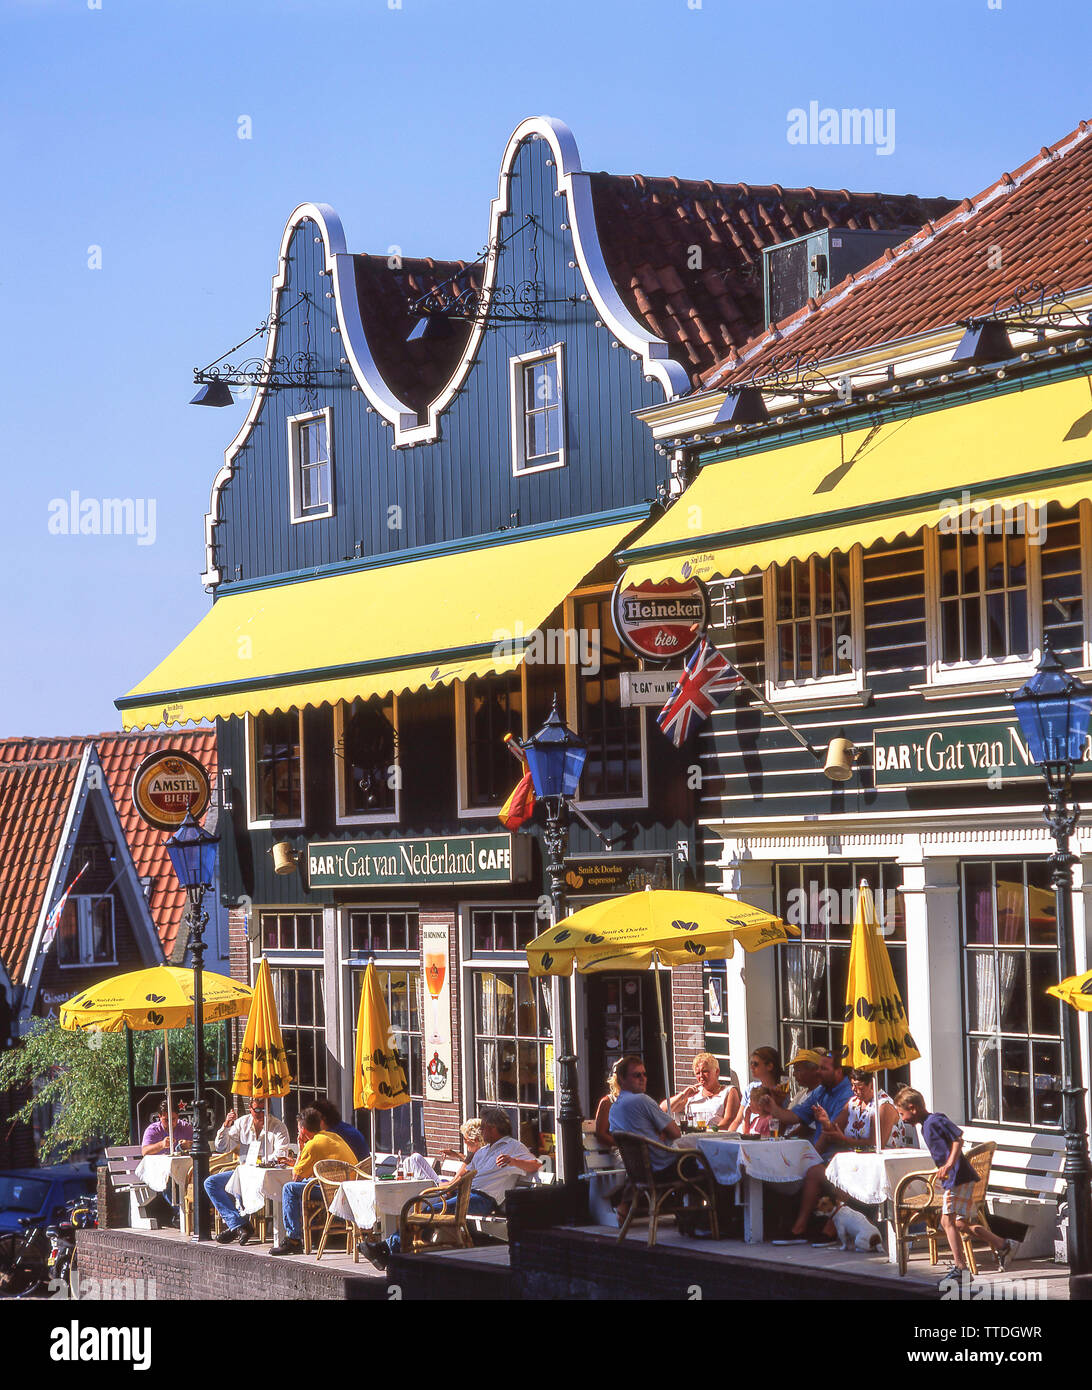 'T Gat van Nederland Cafe, Brugstraat, Volendam, Noord-Holland, Regno dei Paesi Bassi Foto Stock